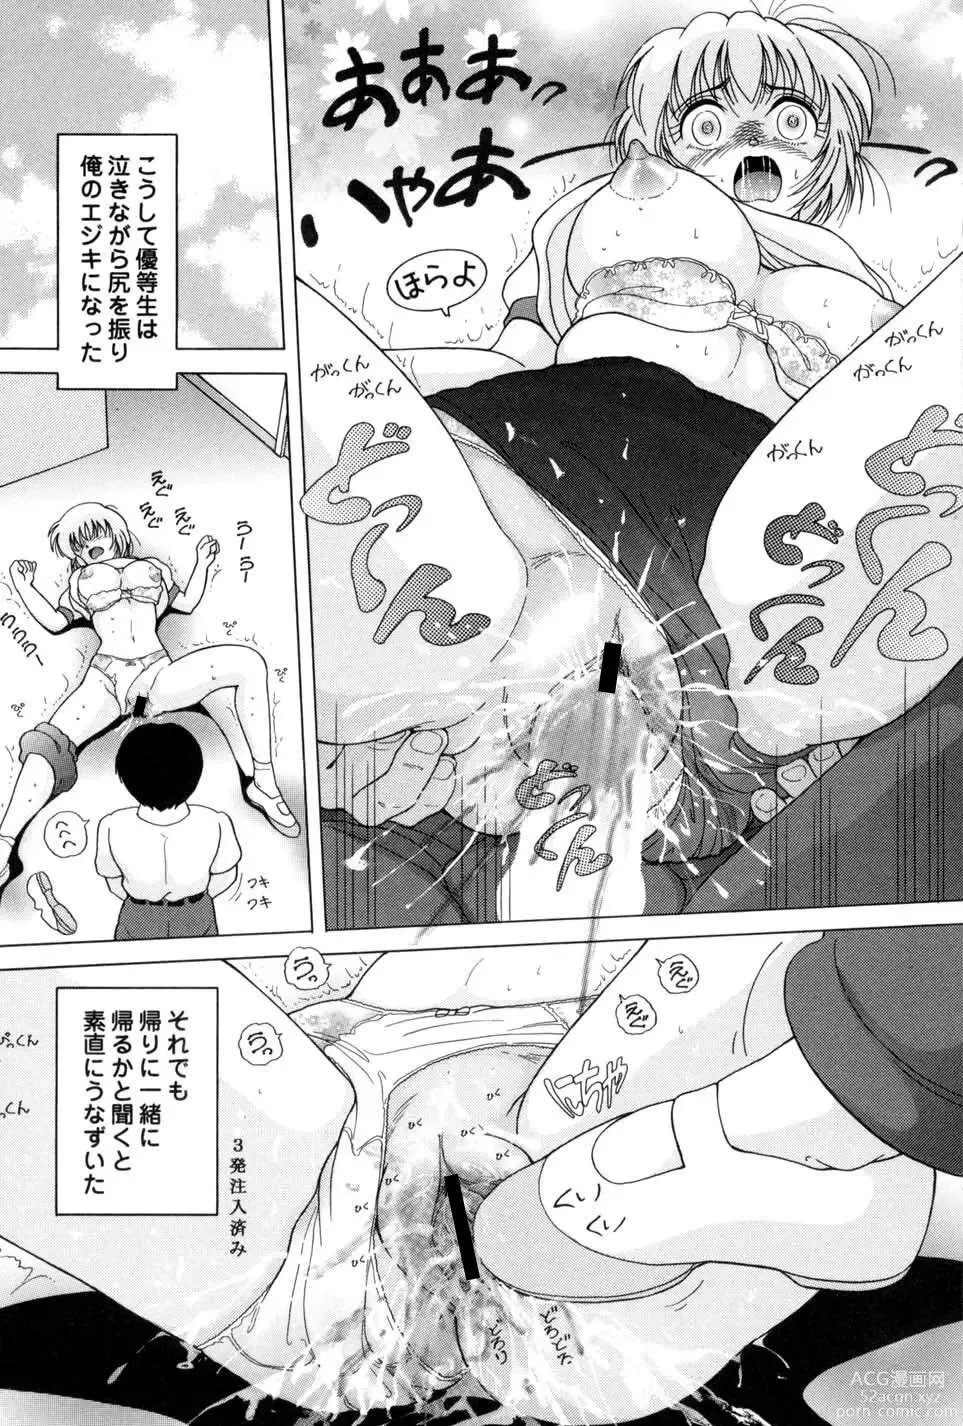 Page 27 of manga Jogakusei Maetsu no Kyoukasho - The Schoolgirl With Shameful Textbook